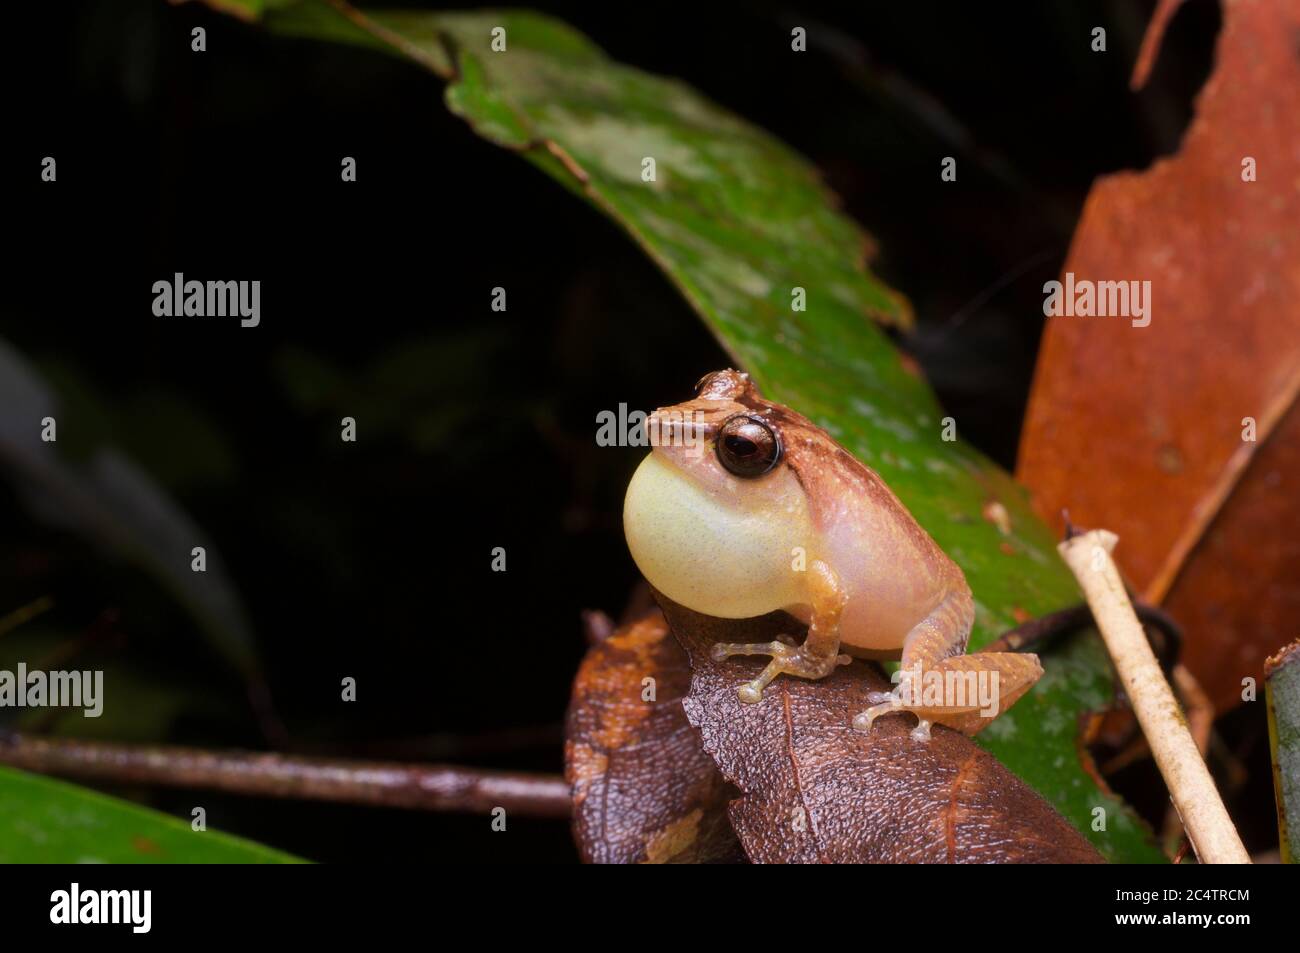 A calling male Leaf-dwelling Shrub Frog (Pseudophilautus folicola) at night in the lowland rainforest of Kalutara, Sri Lanka Stock Photo